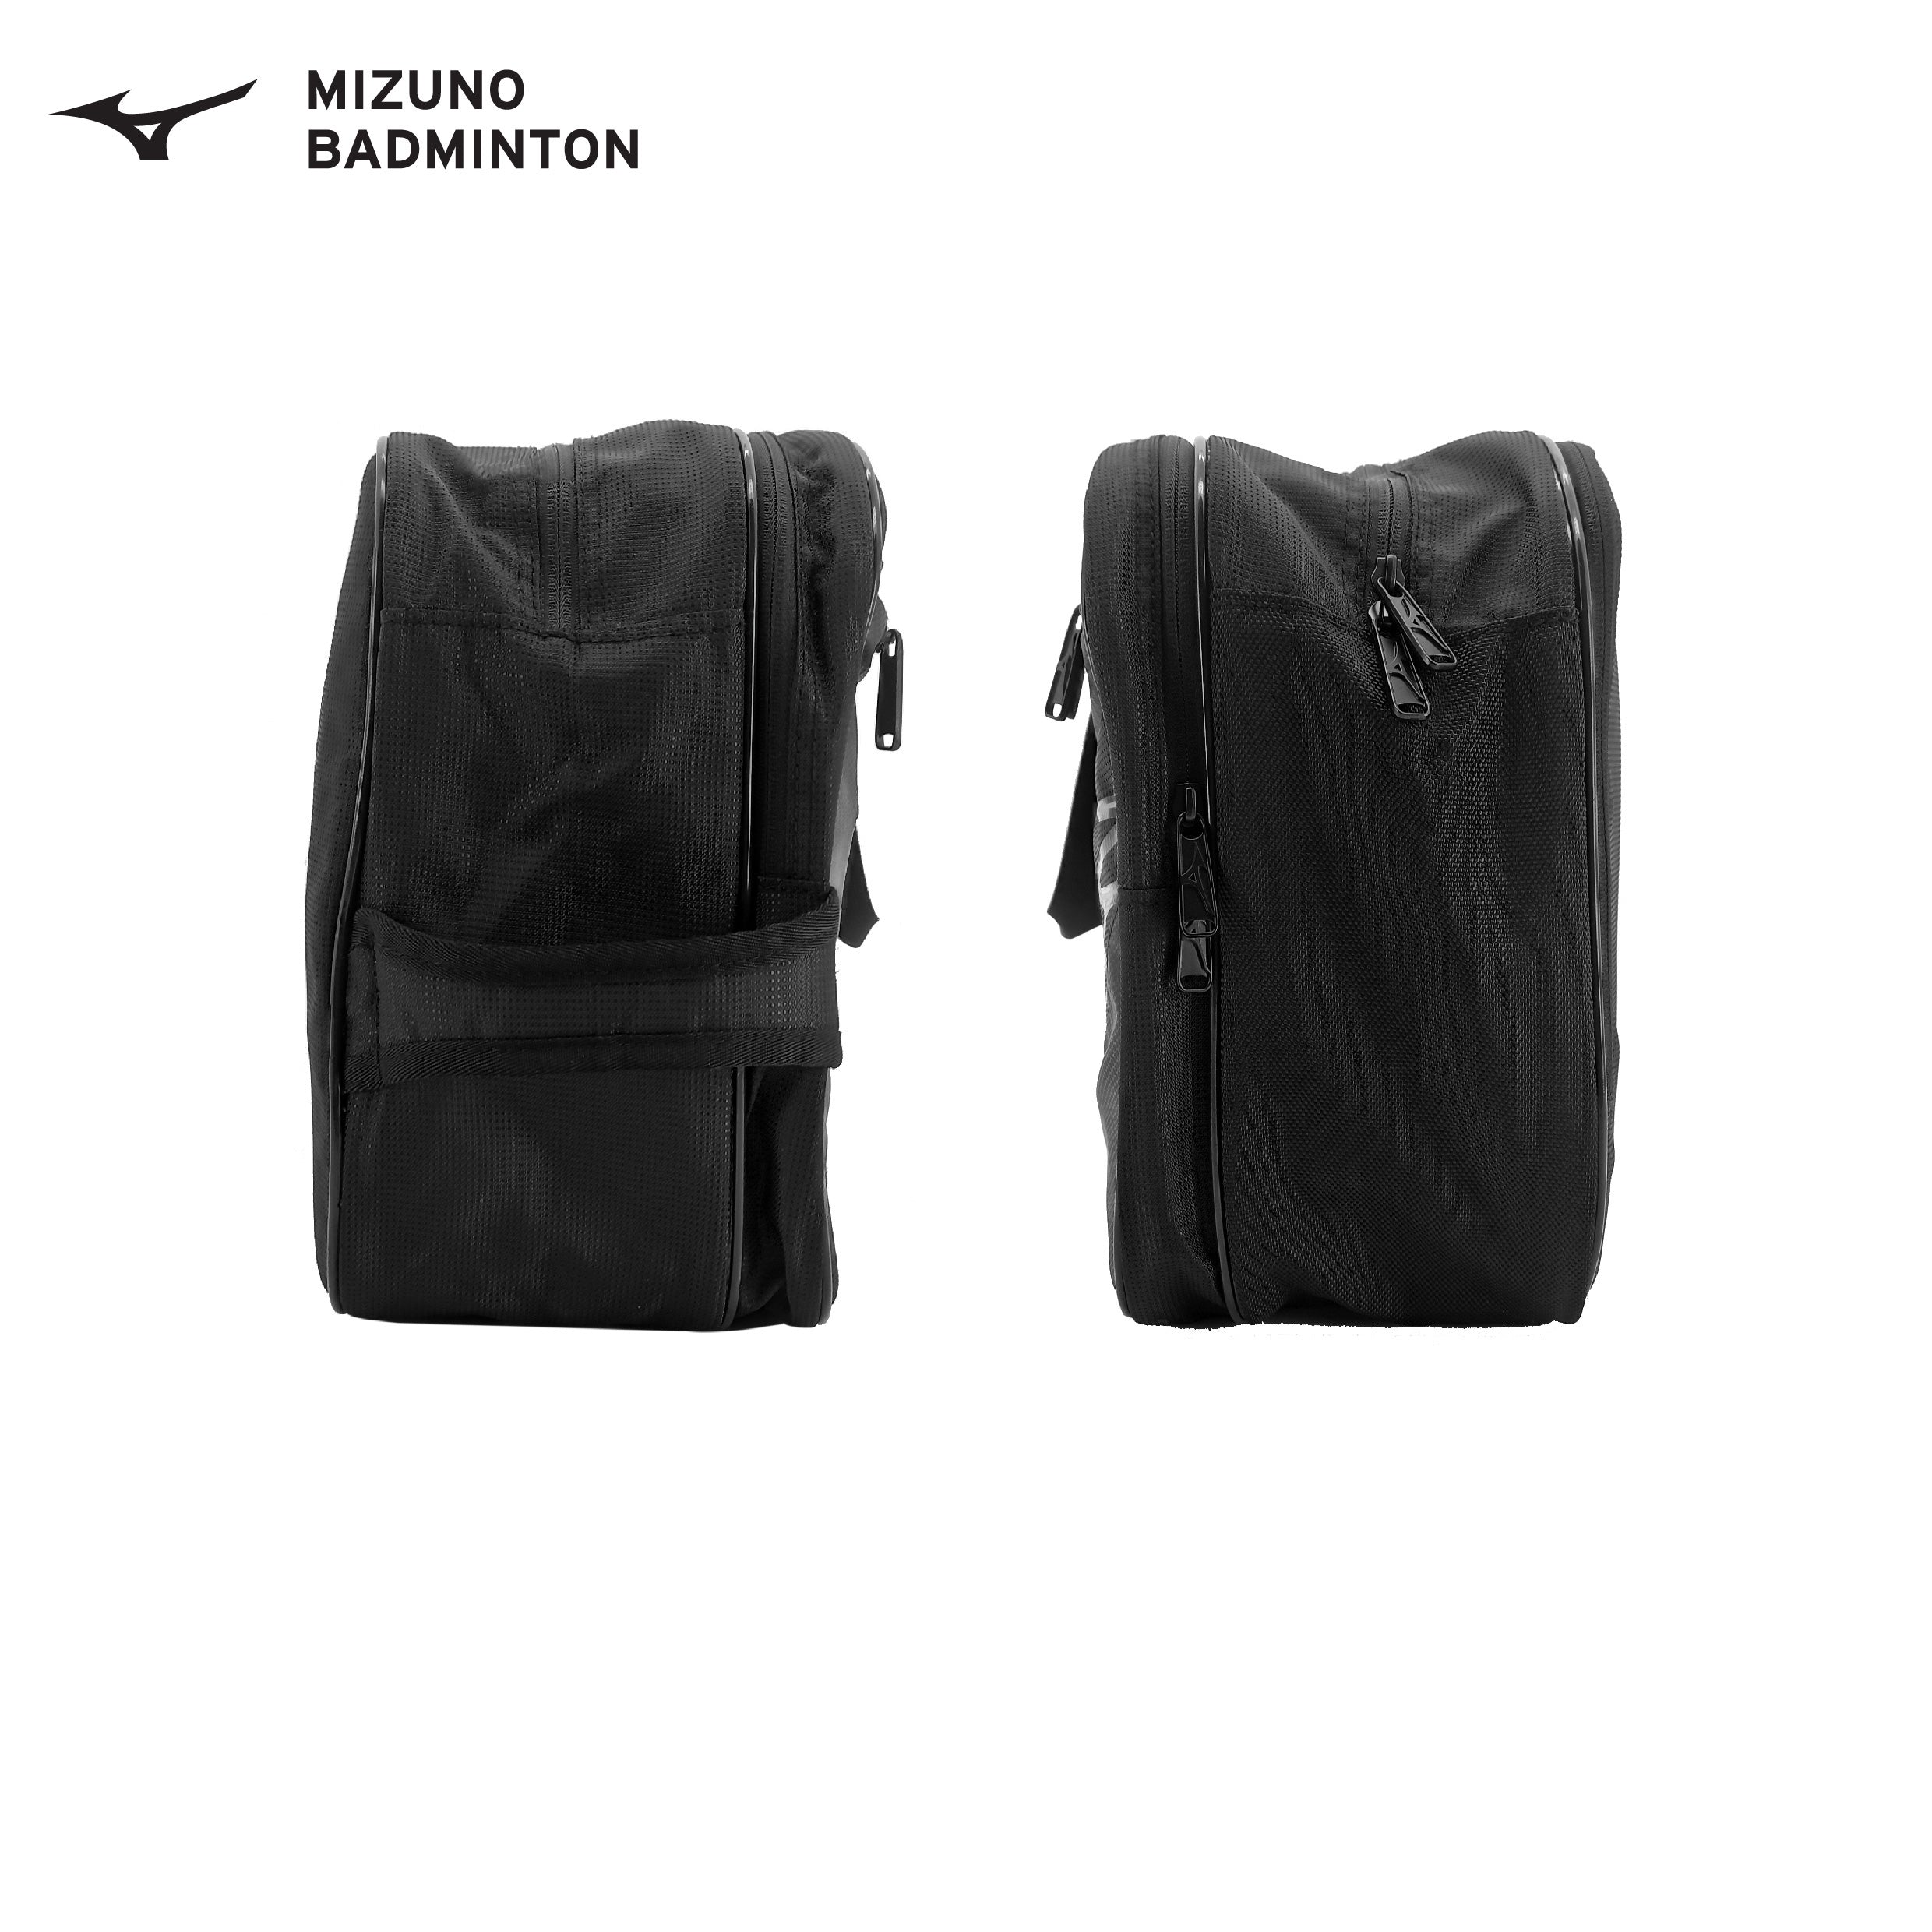 Mizuno Badminton Racket Bag - Duffle Bag